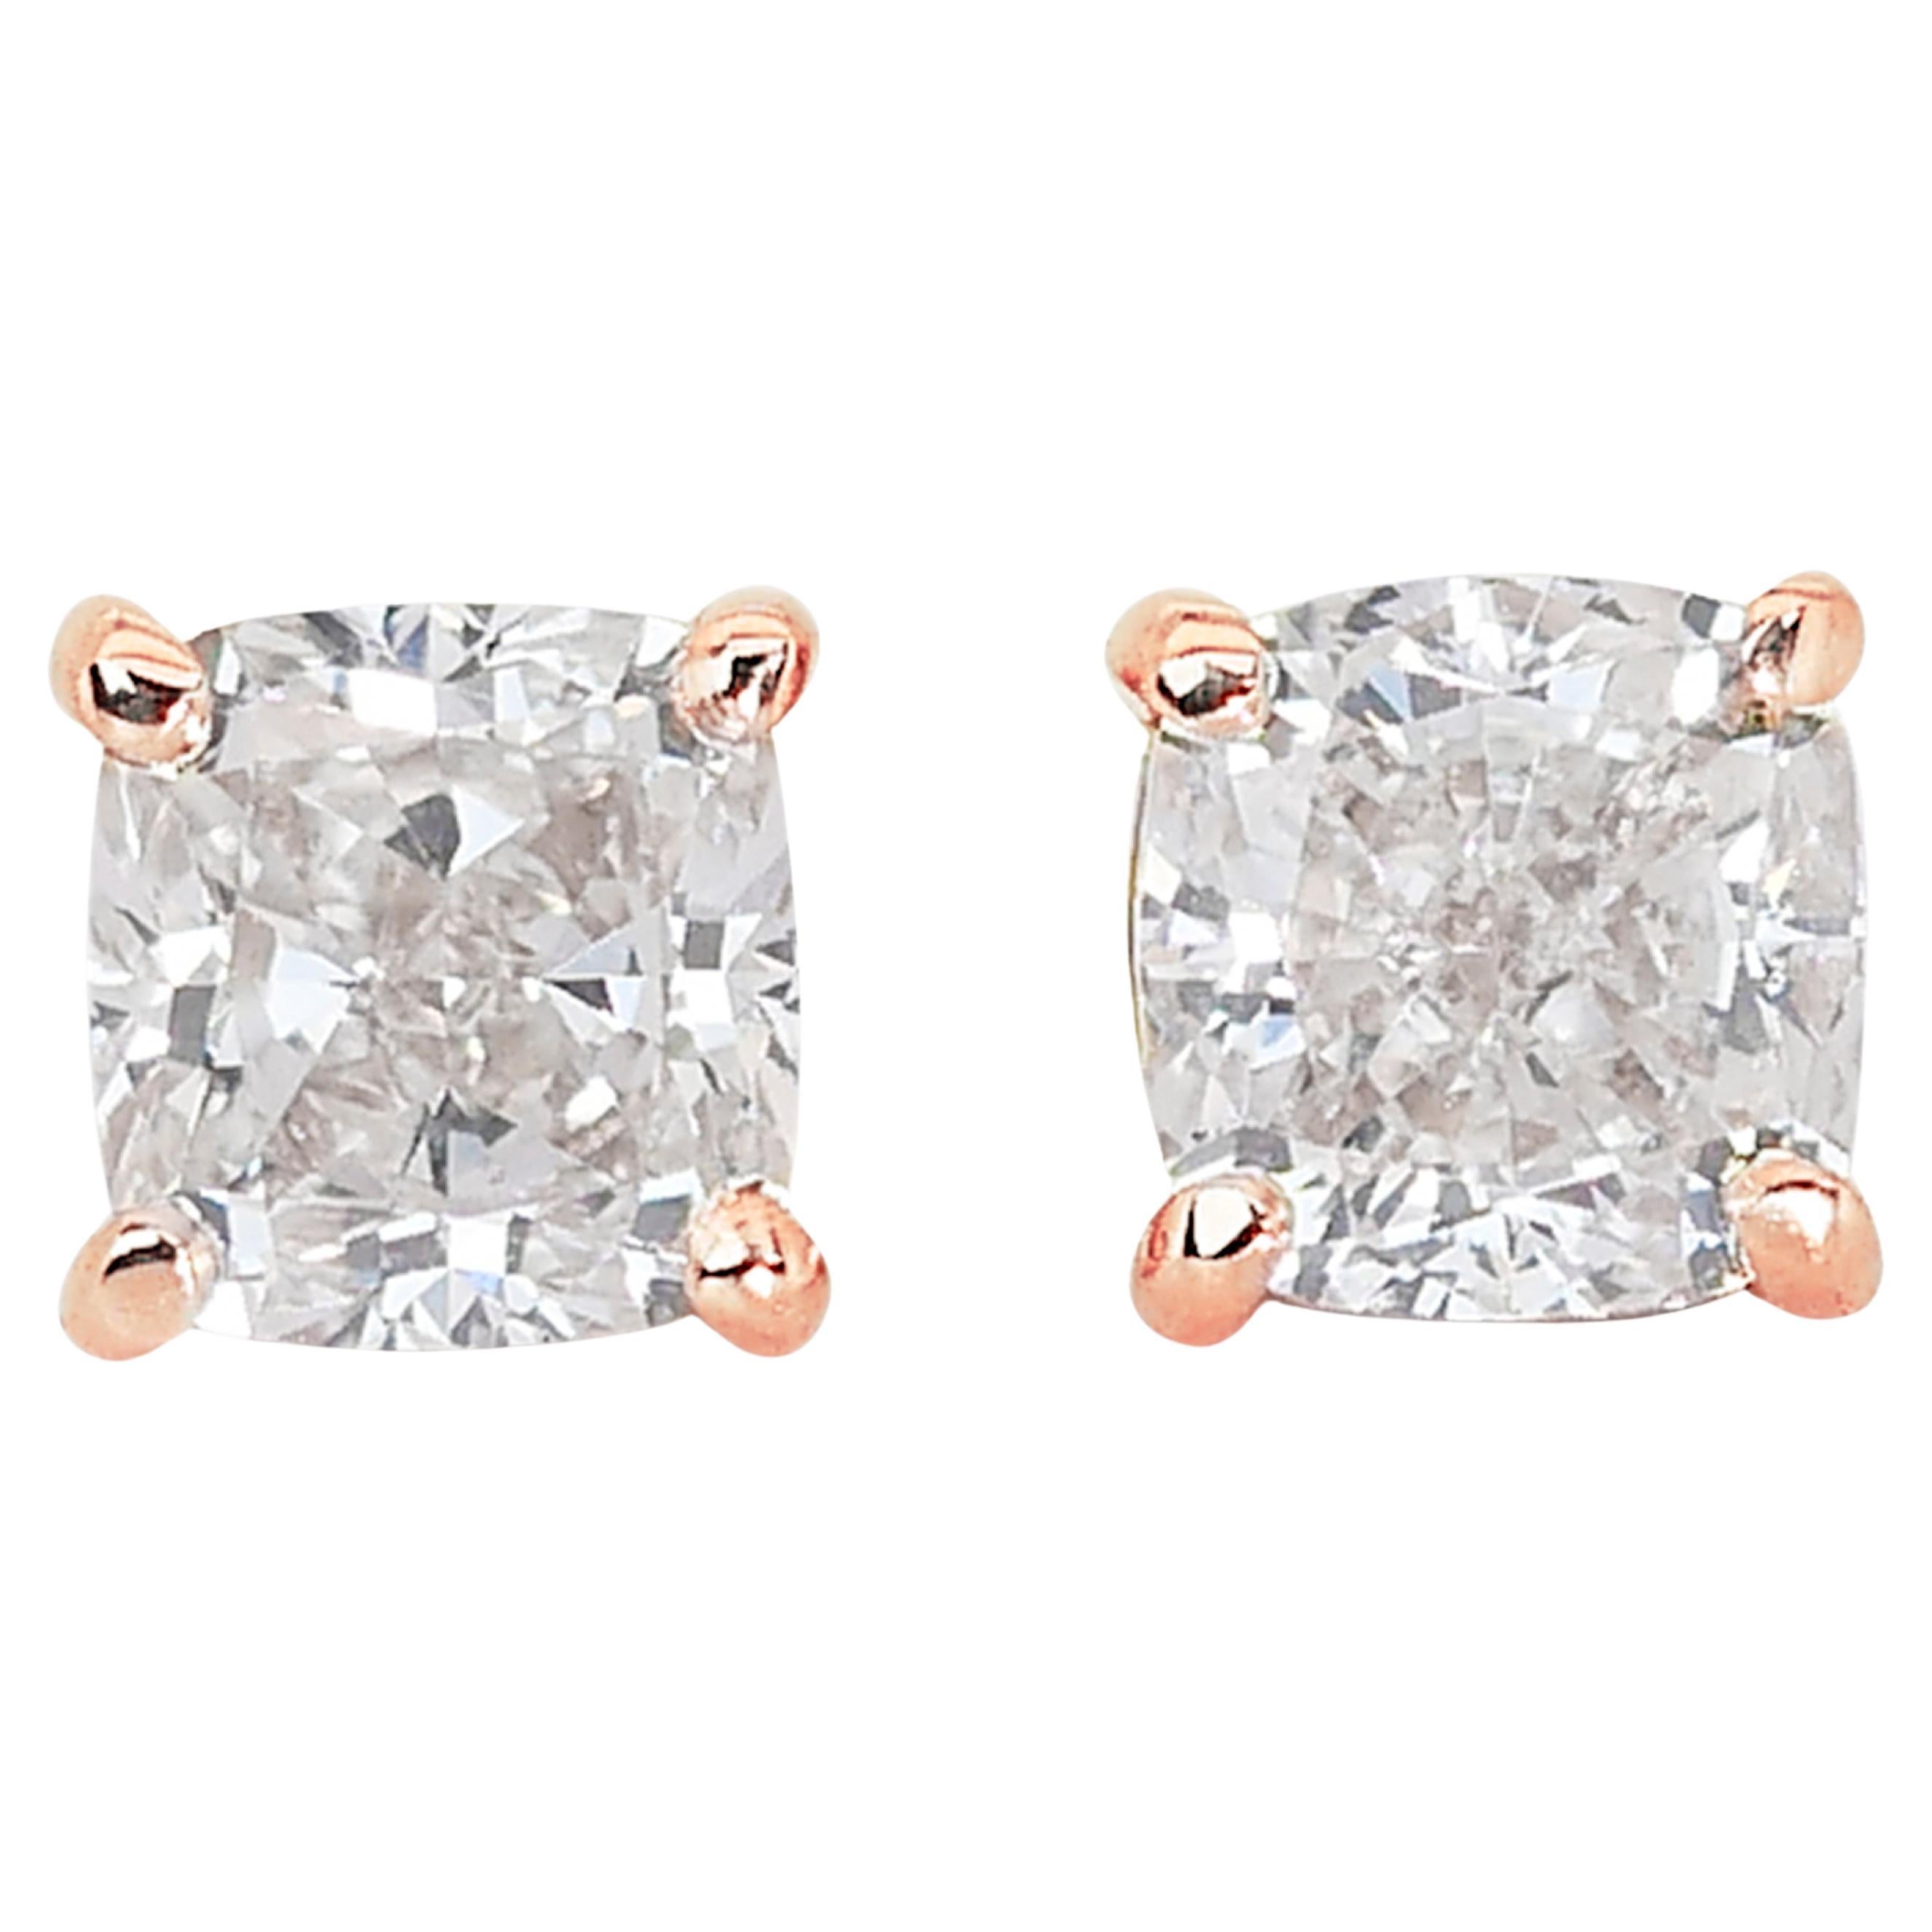 Luxurious 1.68ct Diamond Stud Earrings in 14k Rose Gold - IGI Certified